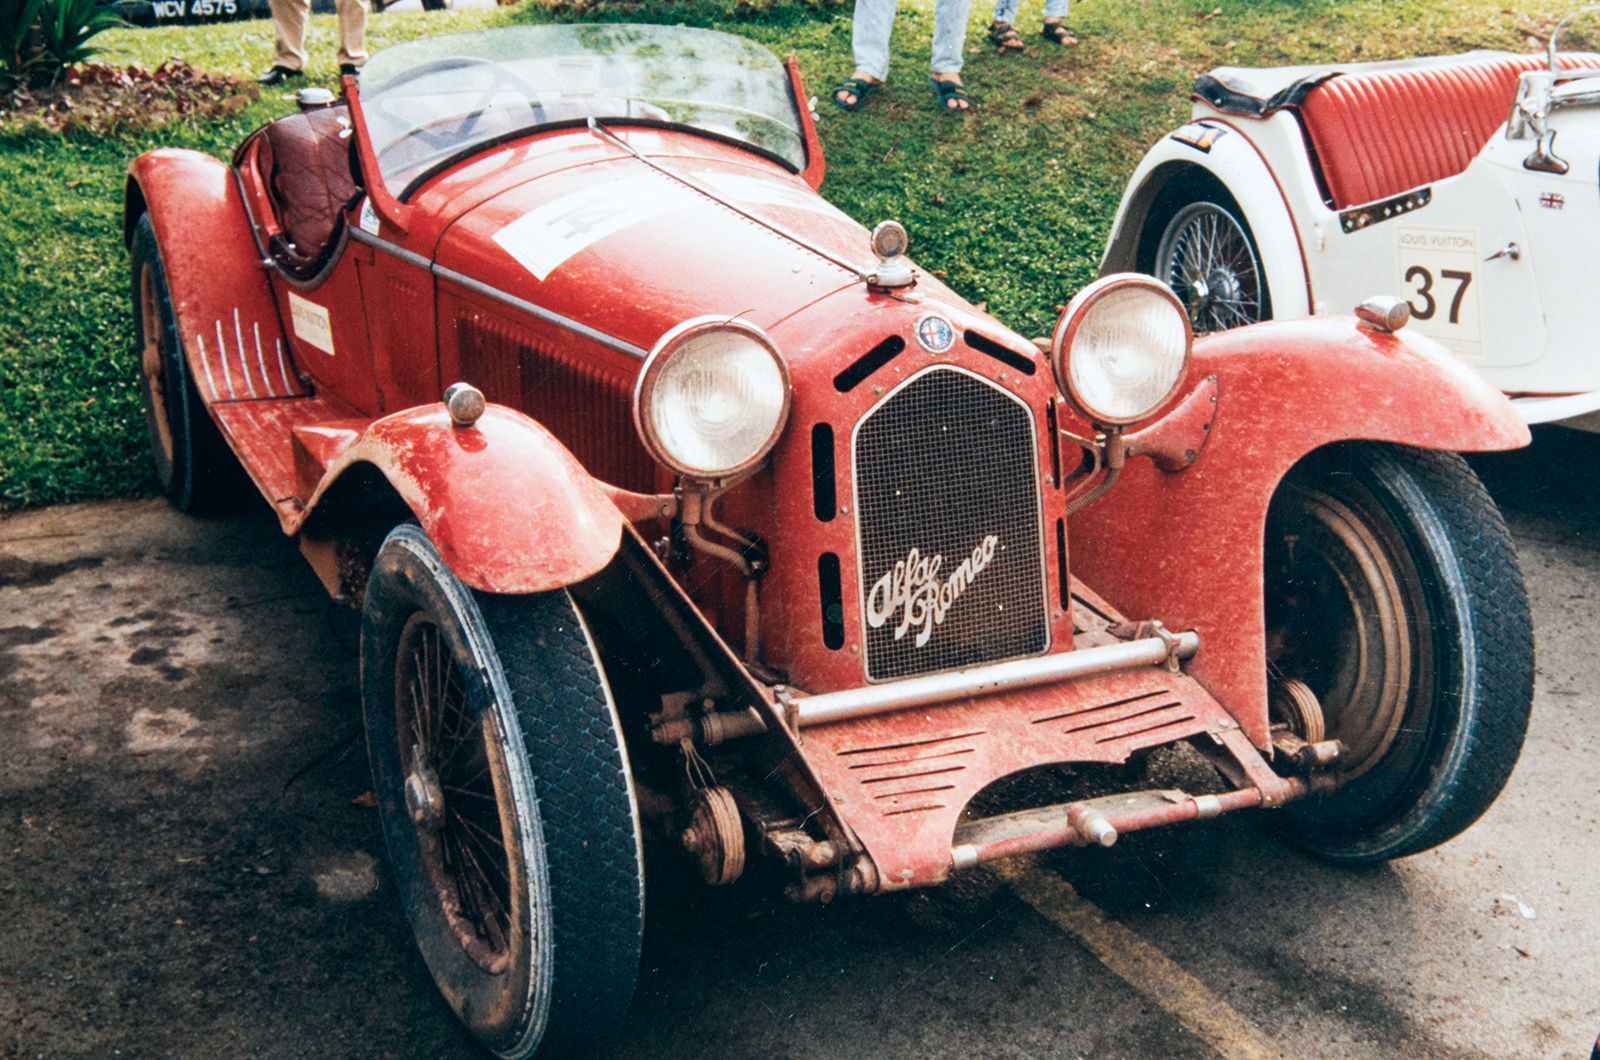 Classic & Sports Car – Remembering Alain de Cadenet